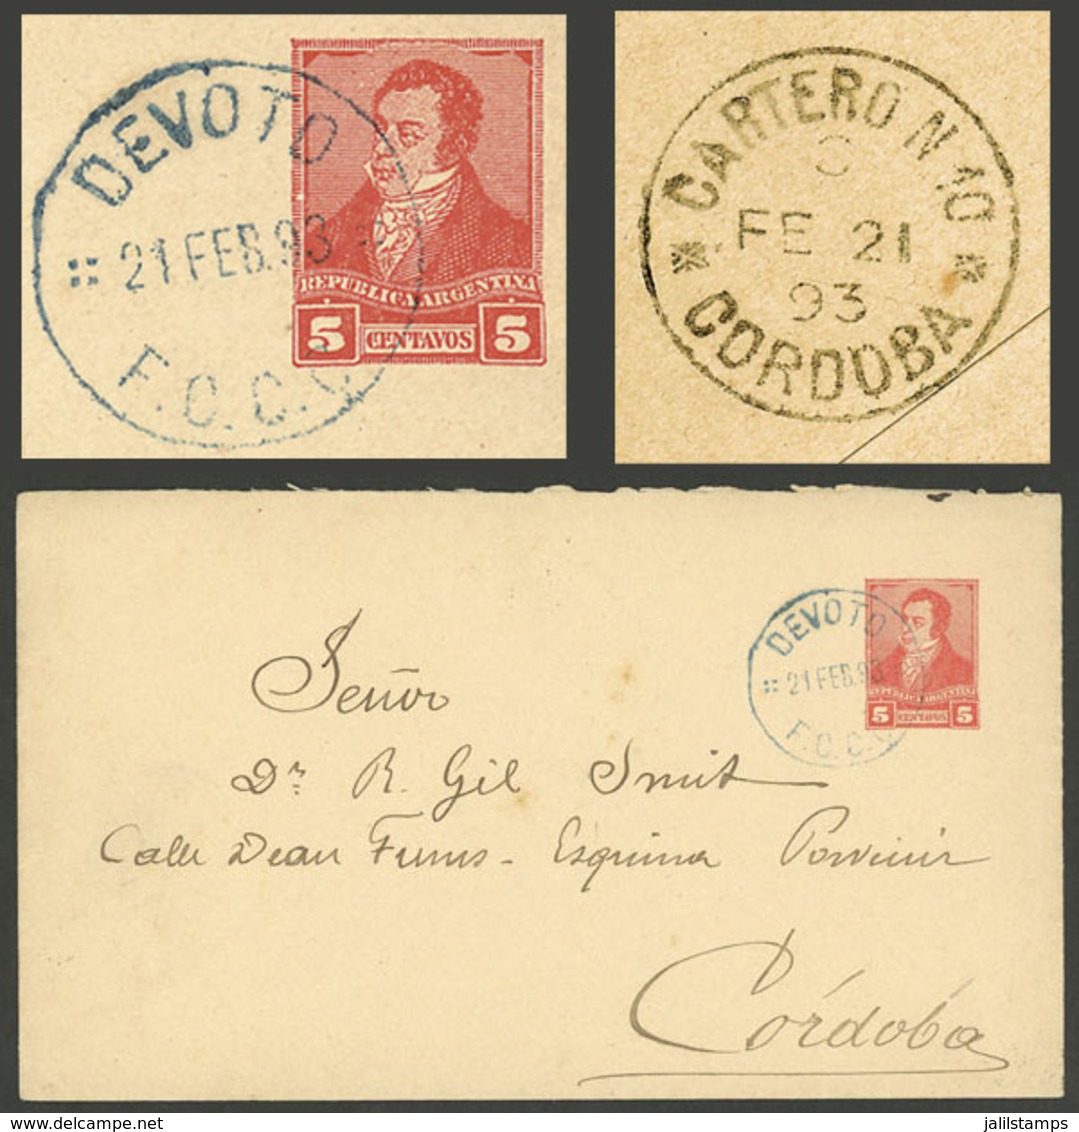 ARGENTINA: 21/FE/1893: Devoto - Córdoba, 5c. Stationery Envelope, Backstamped "CARTERO N 10 - CORDOBA", VF Quality" - Briefe U. Dokumente